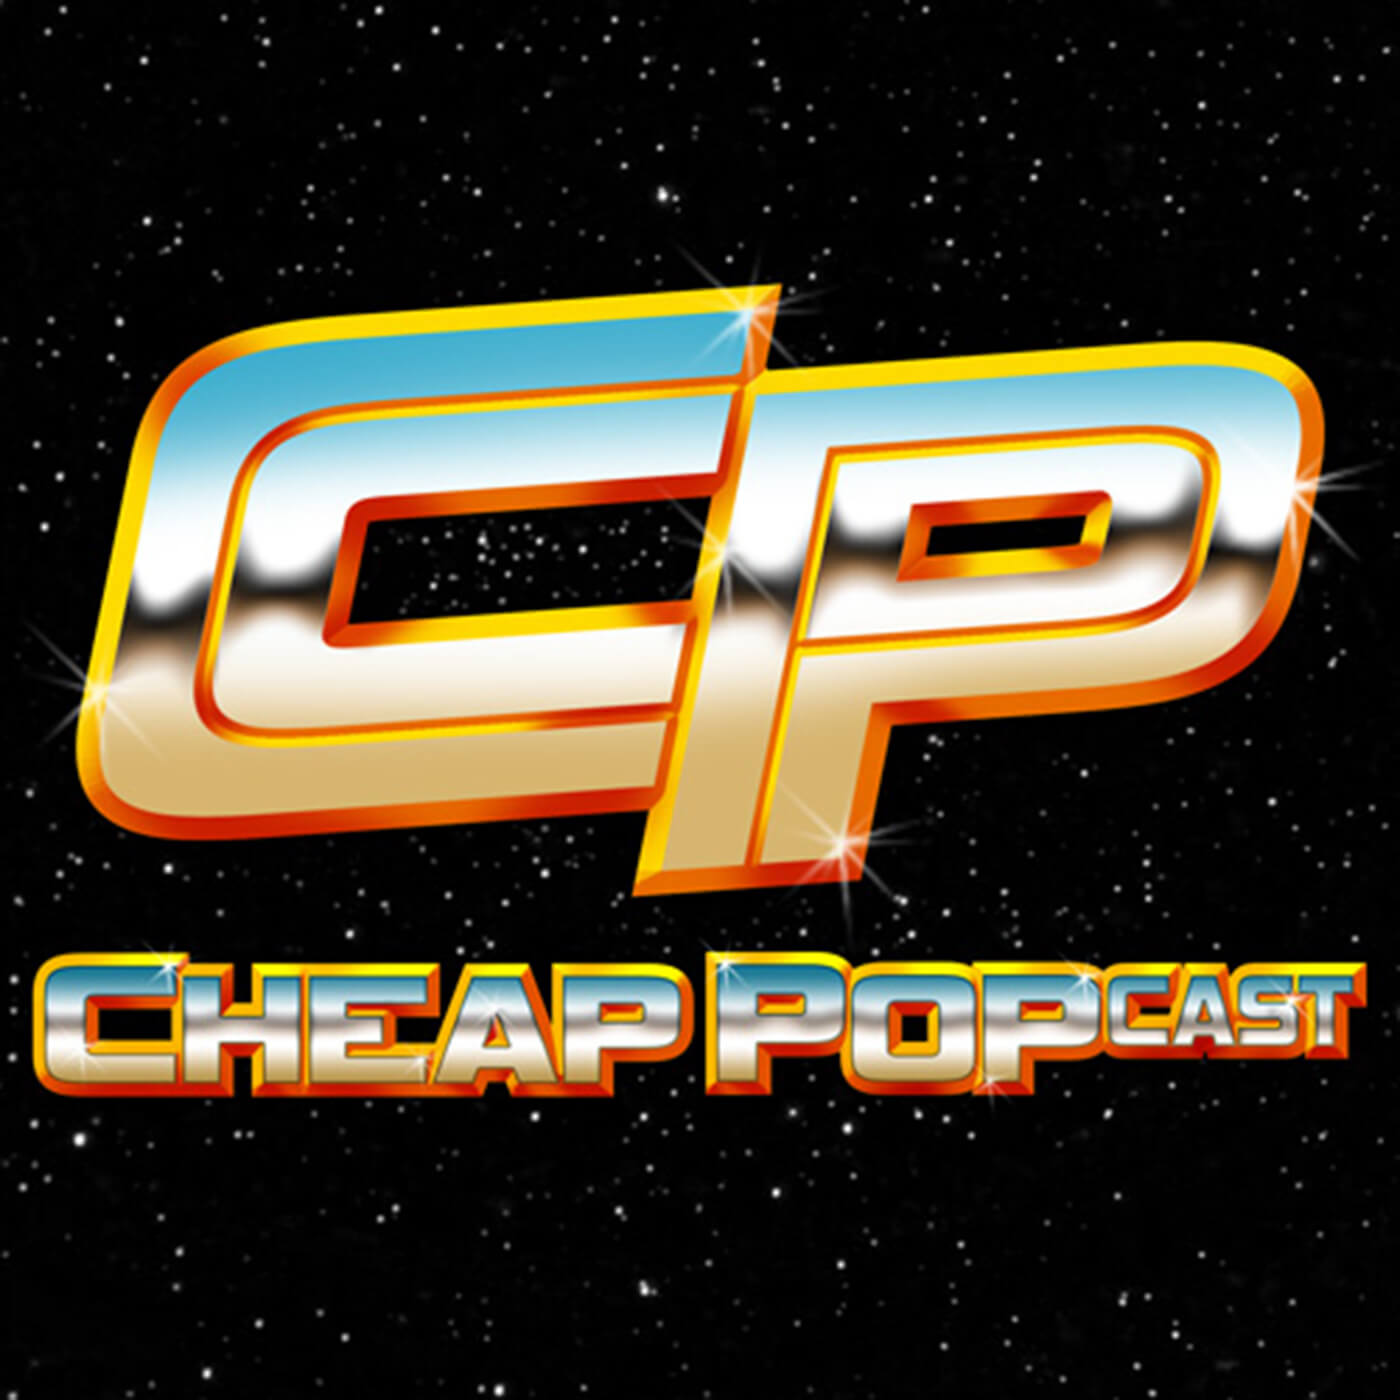 Cheap Popcast – Laser Time